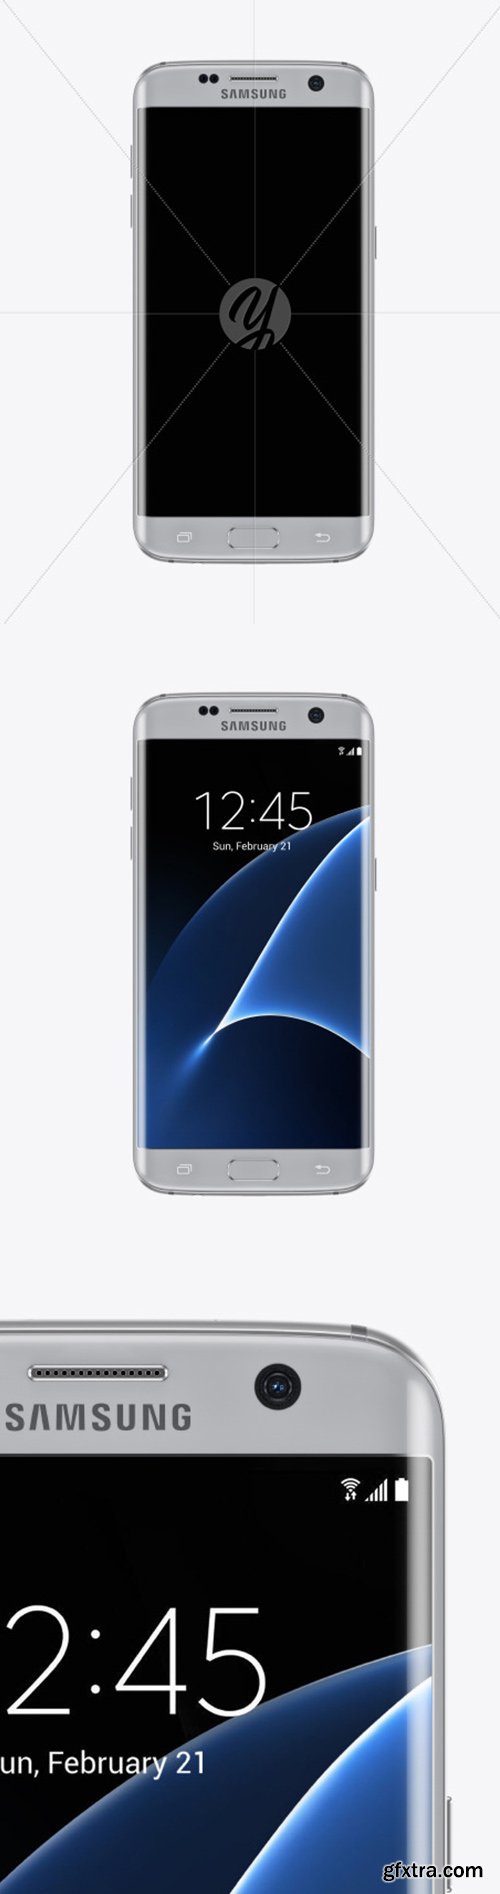 Silver Titanium Samsung Galaxy S7 Phone Mockup 52115